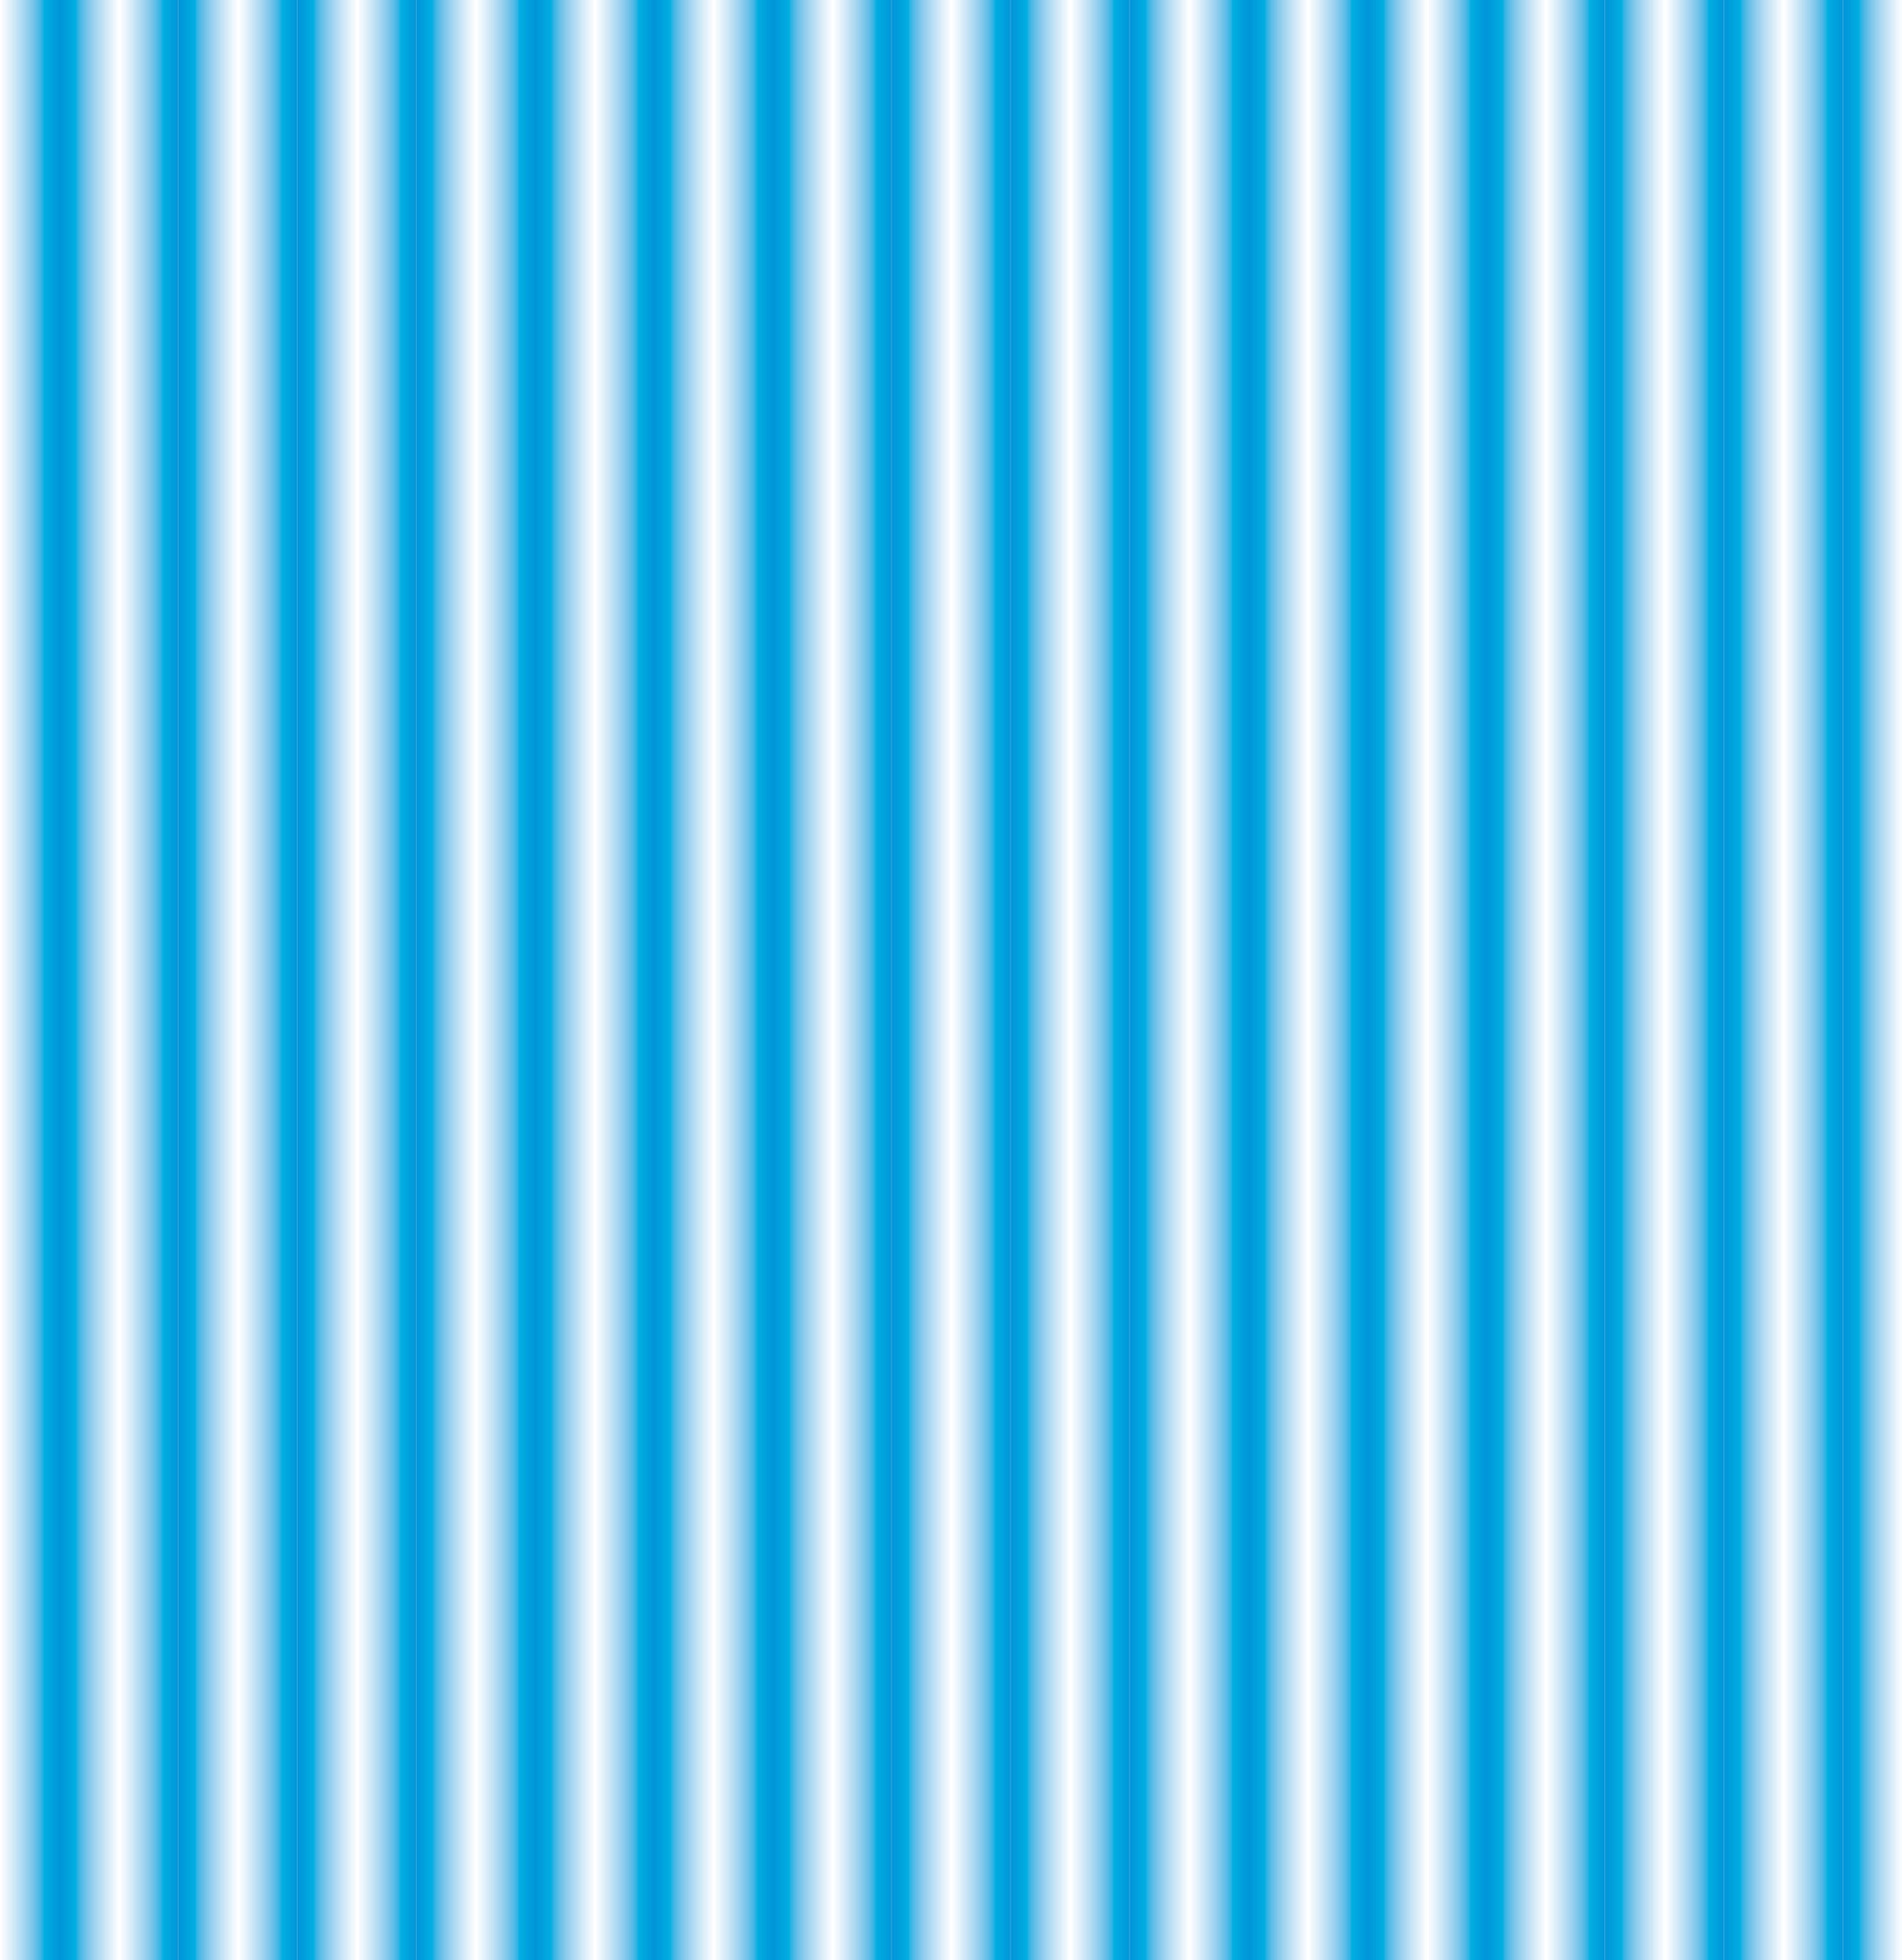 Striped Wallpaper Design In Blue And White